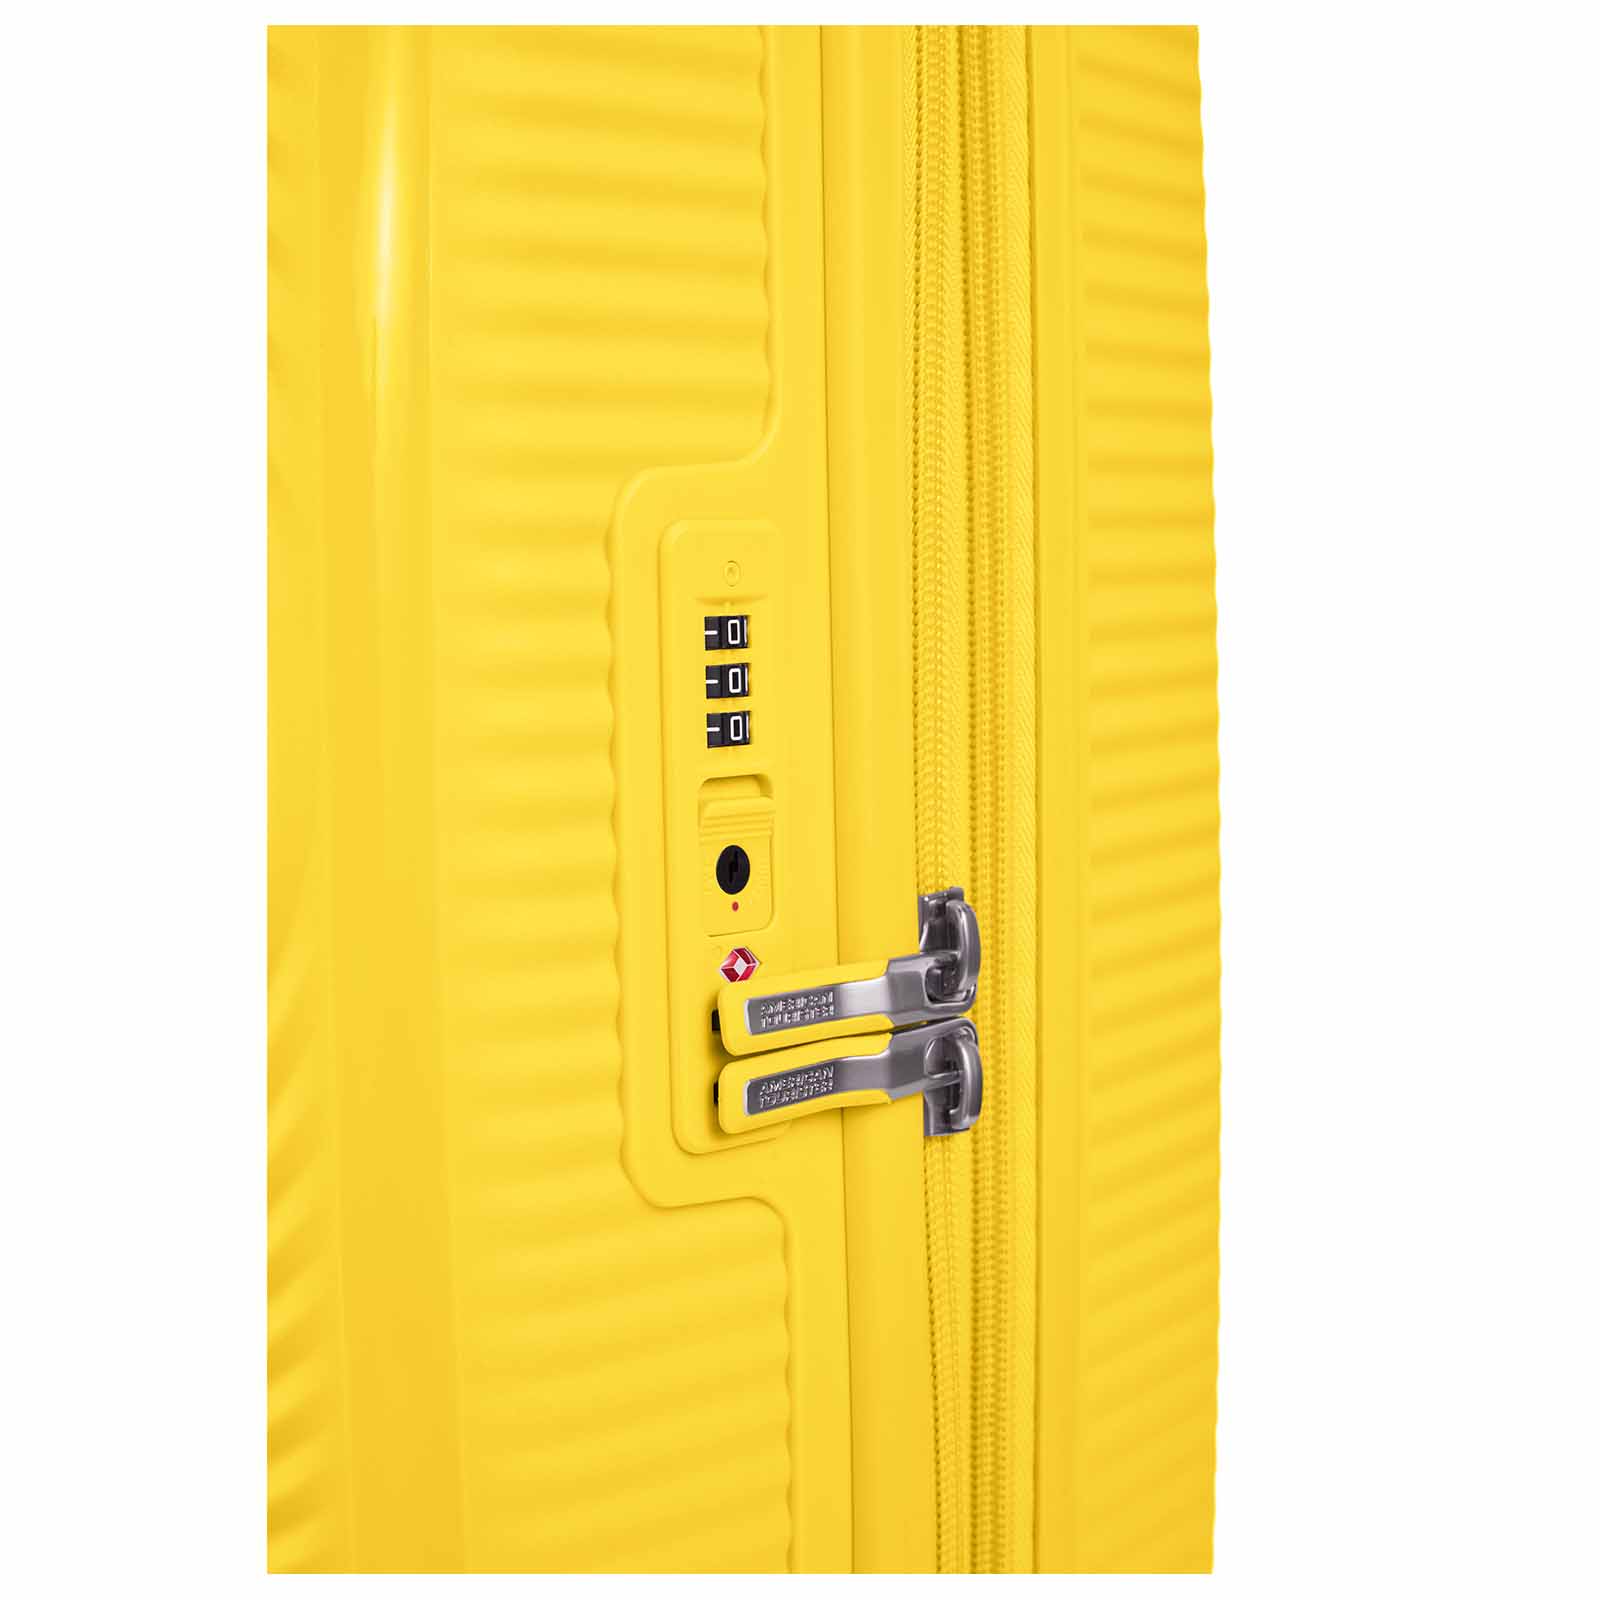 American-Tourister-Curio-2-69cm-Suitcase-Golden-Yellow-Lock